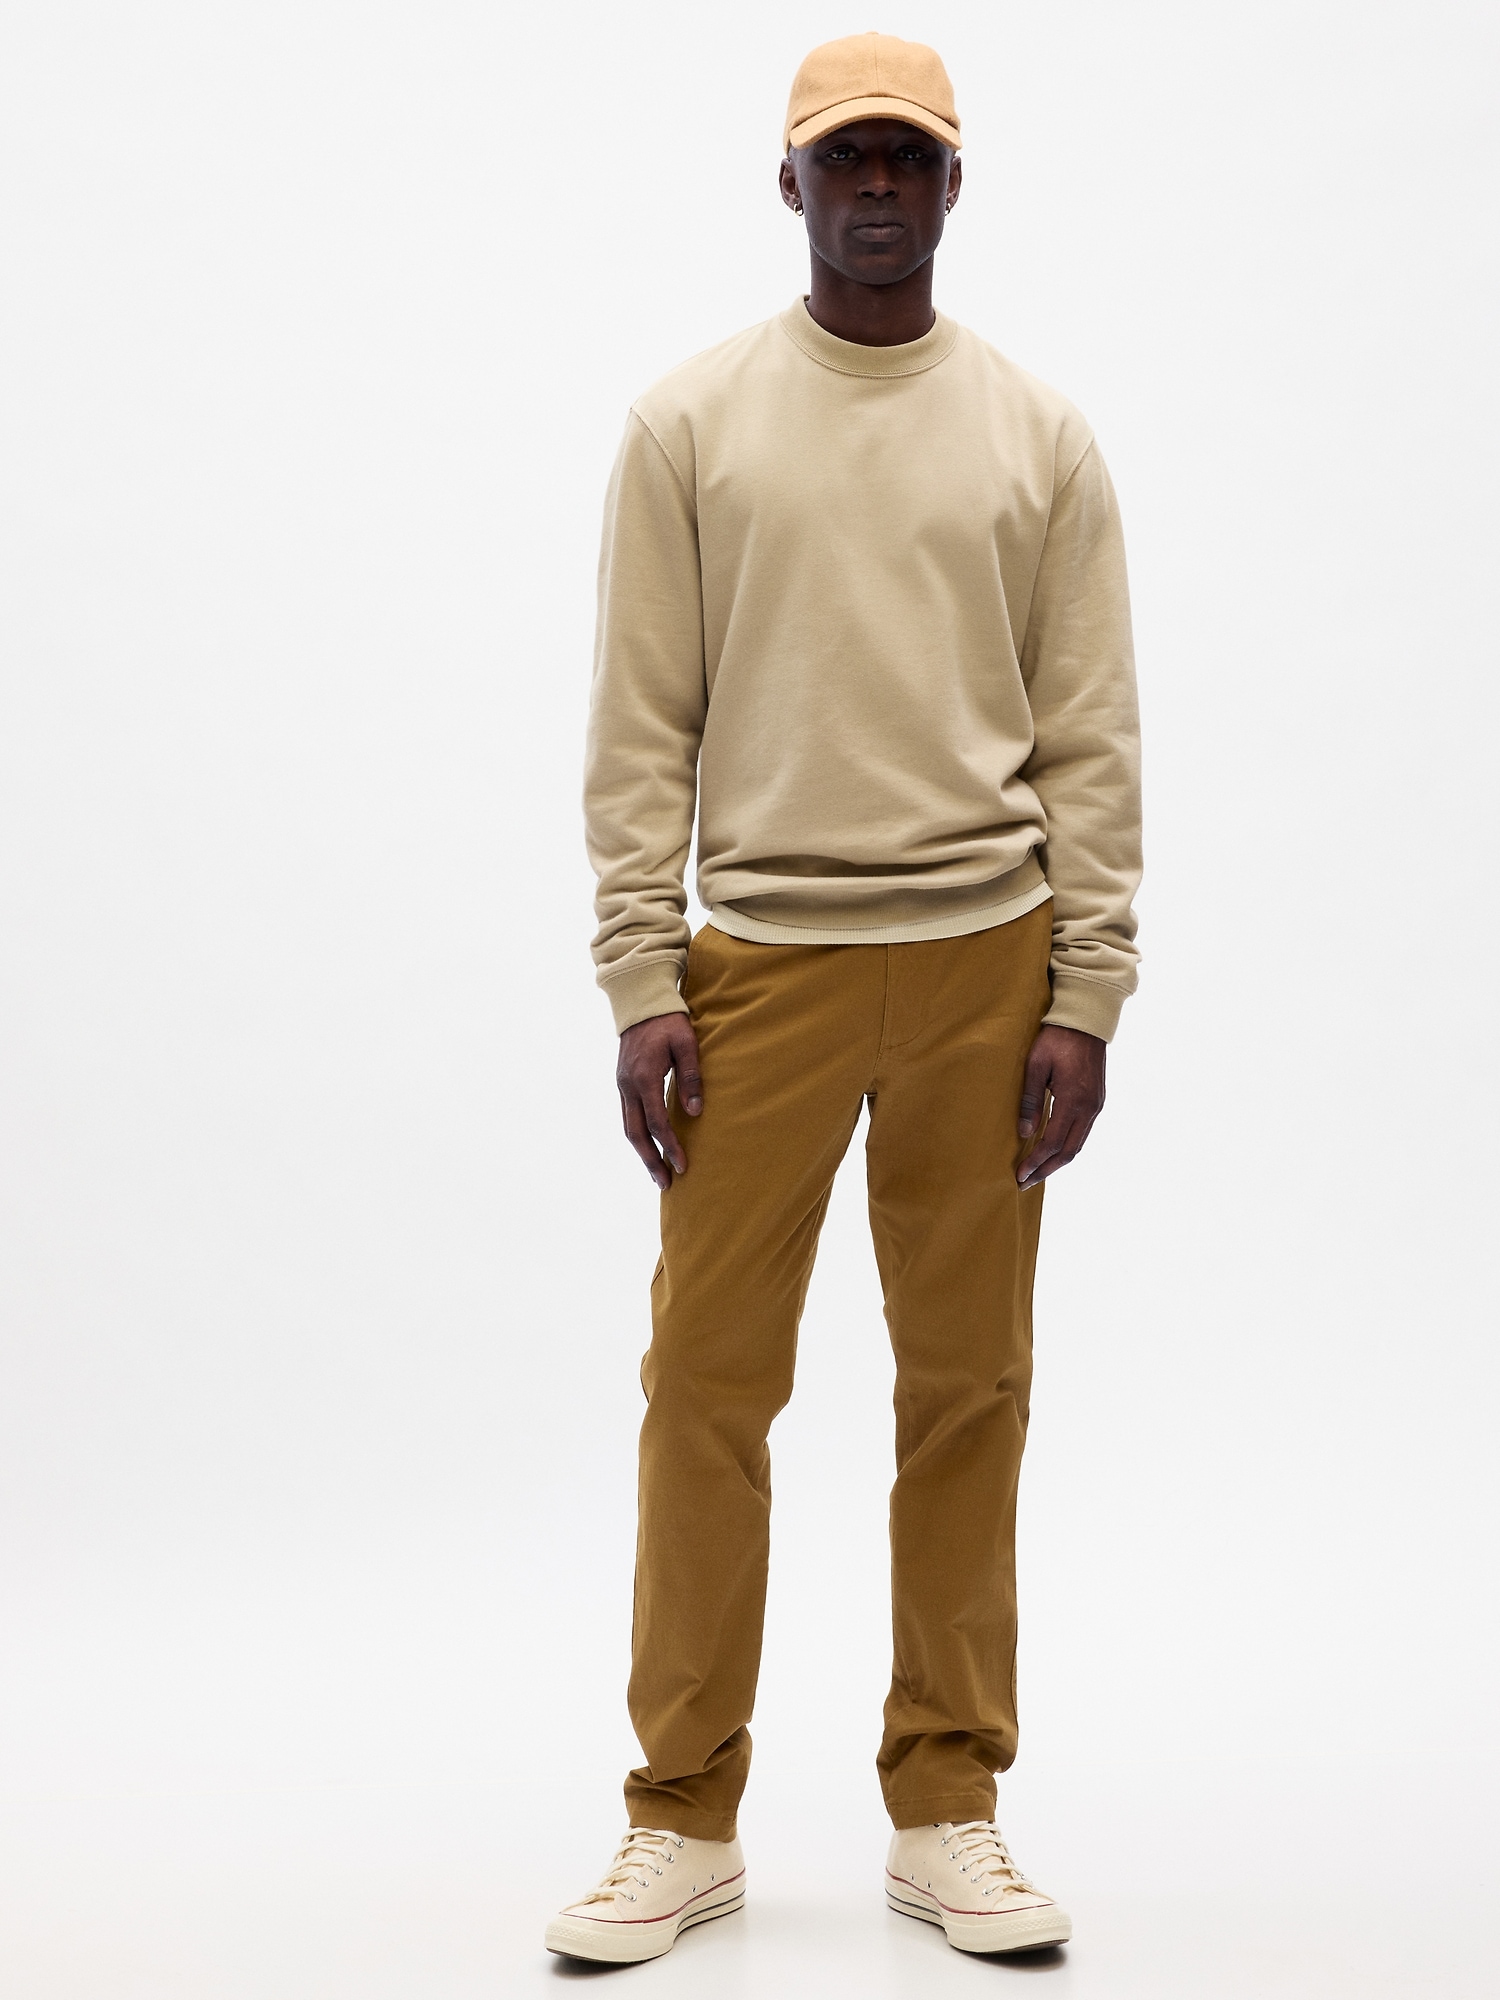 Men's 30x30 Gap Slim Fit Jeans, Dark Wash, 100% Cotton, Denim, Pants | eBay